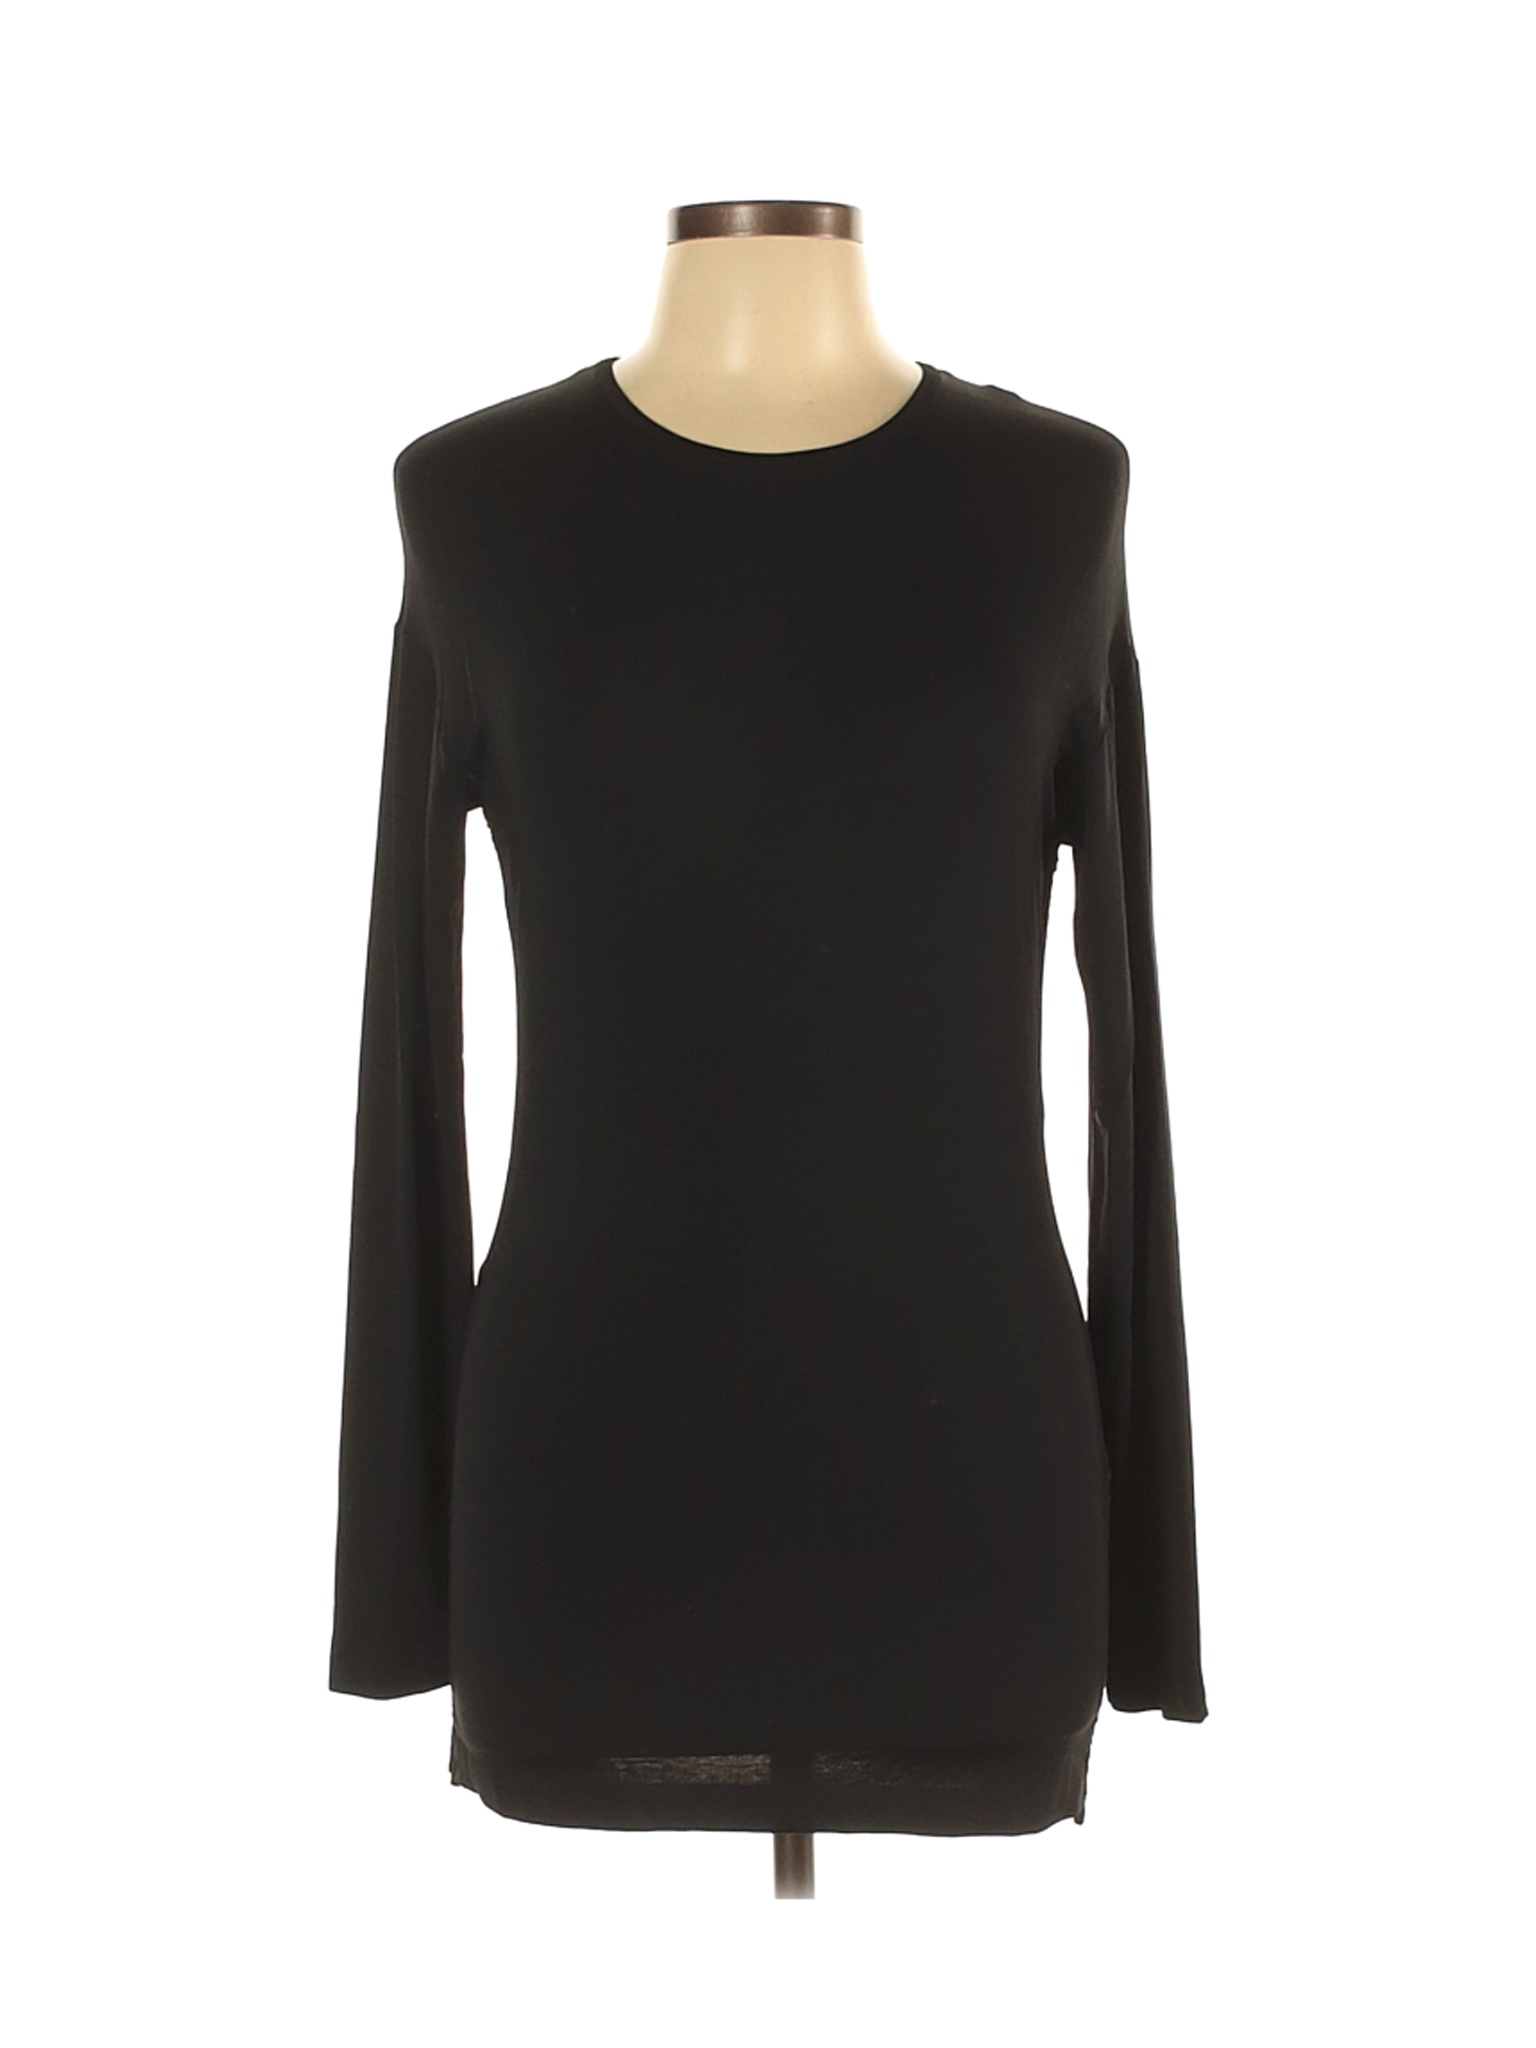 Jil Sander Women Black Long Sleeve T-Shirt M | eBay